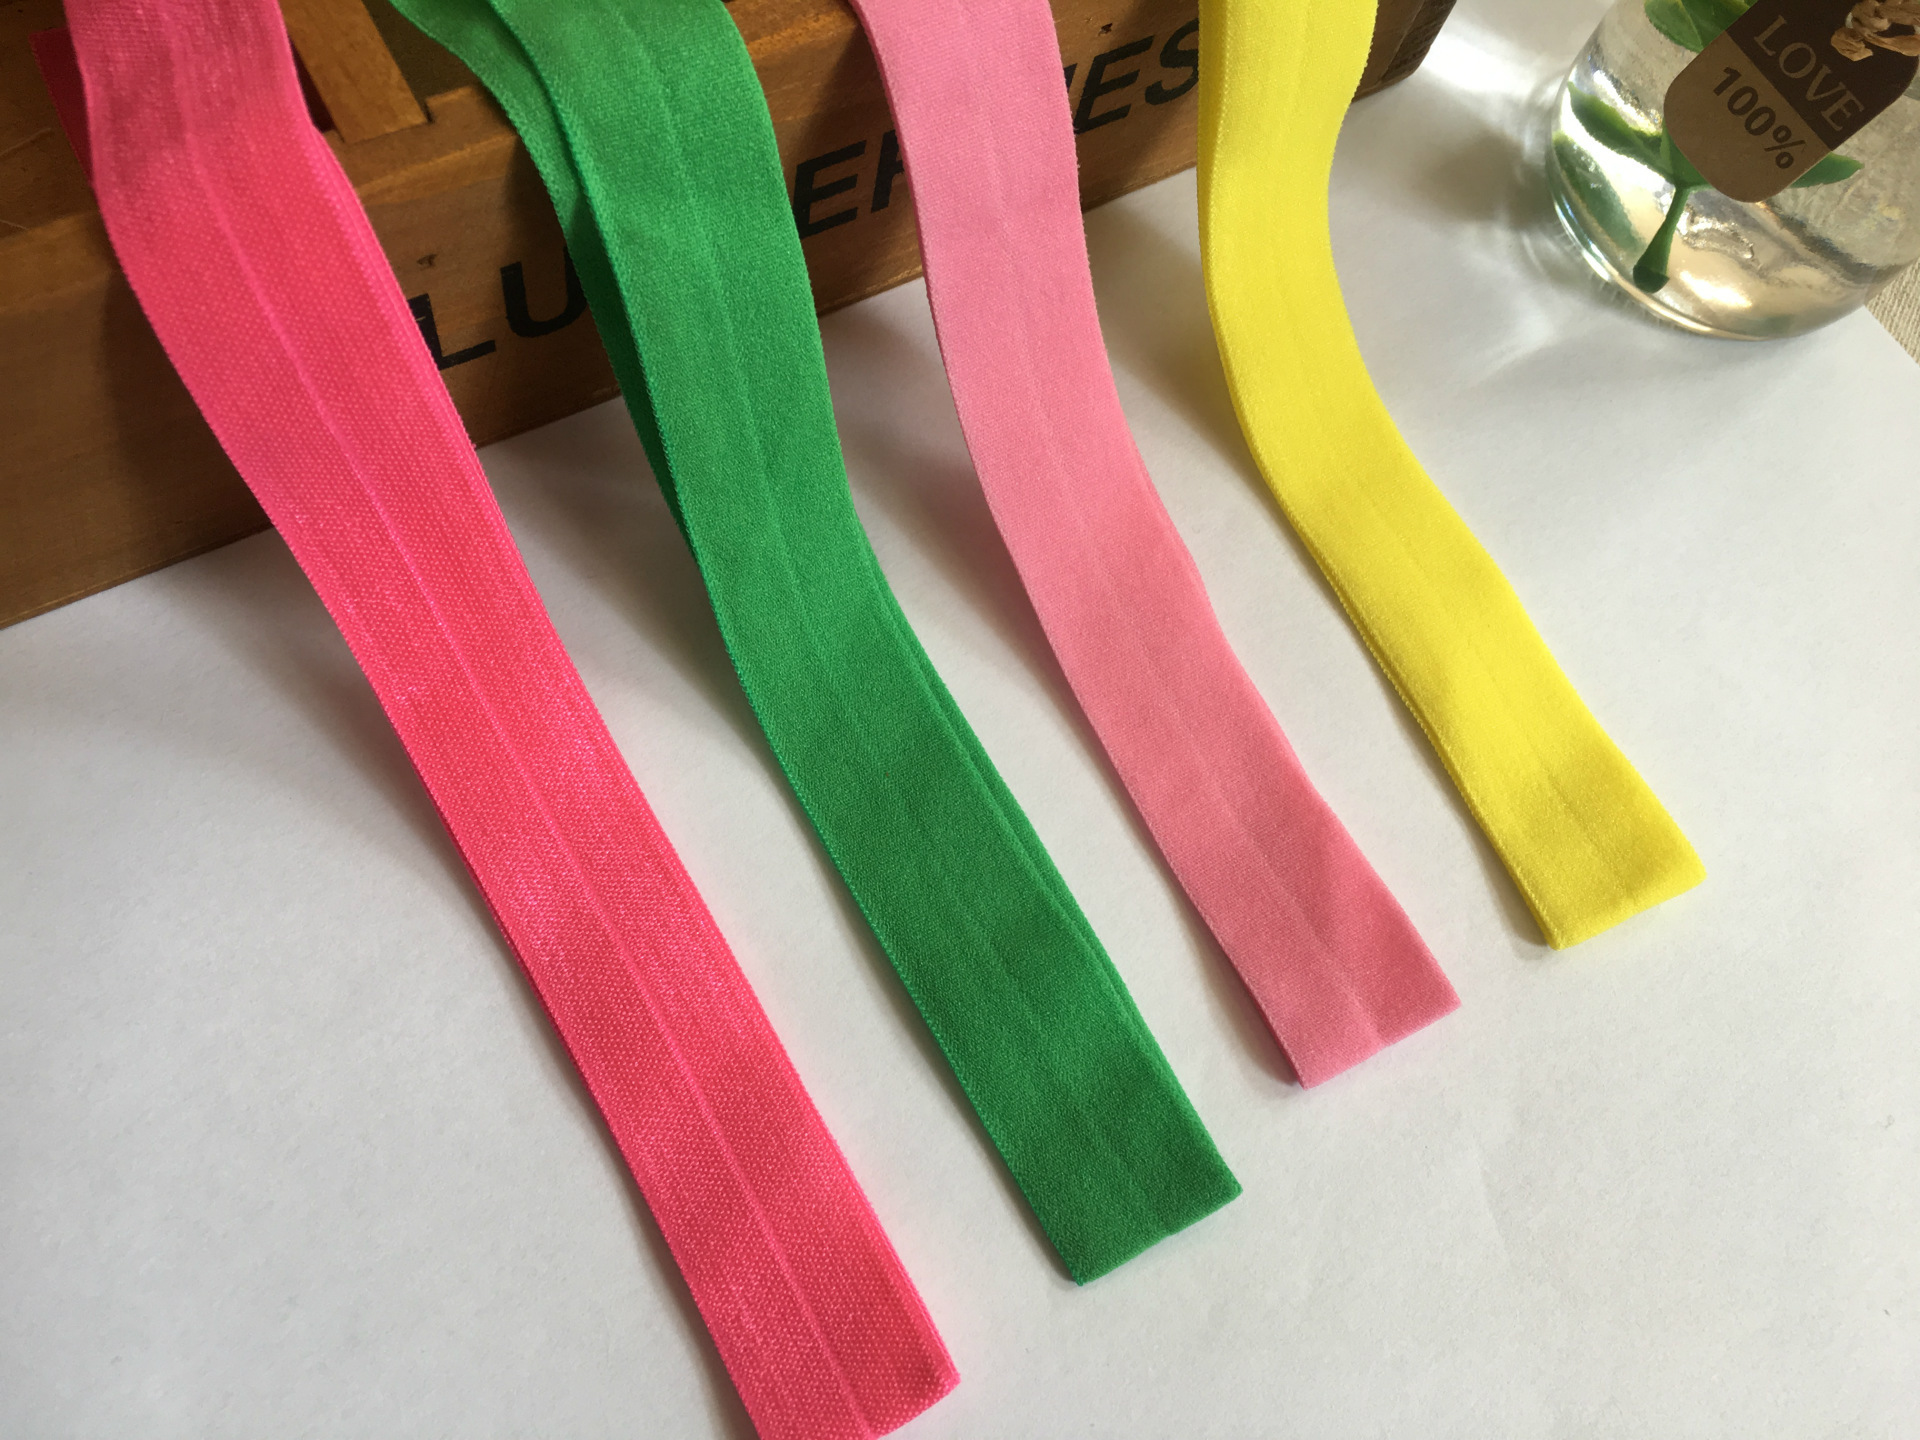 Eco-friendly foldover elastic tape for binding